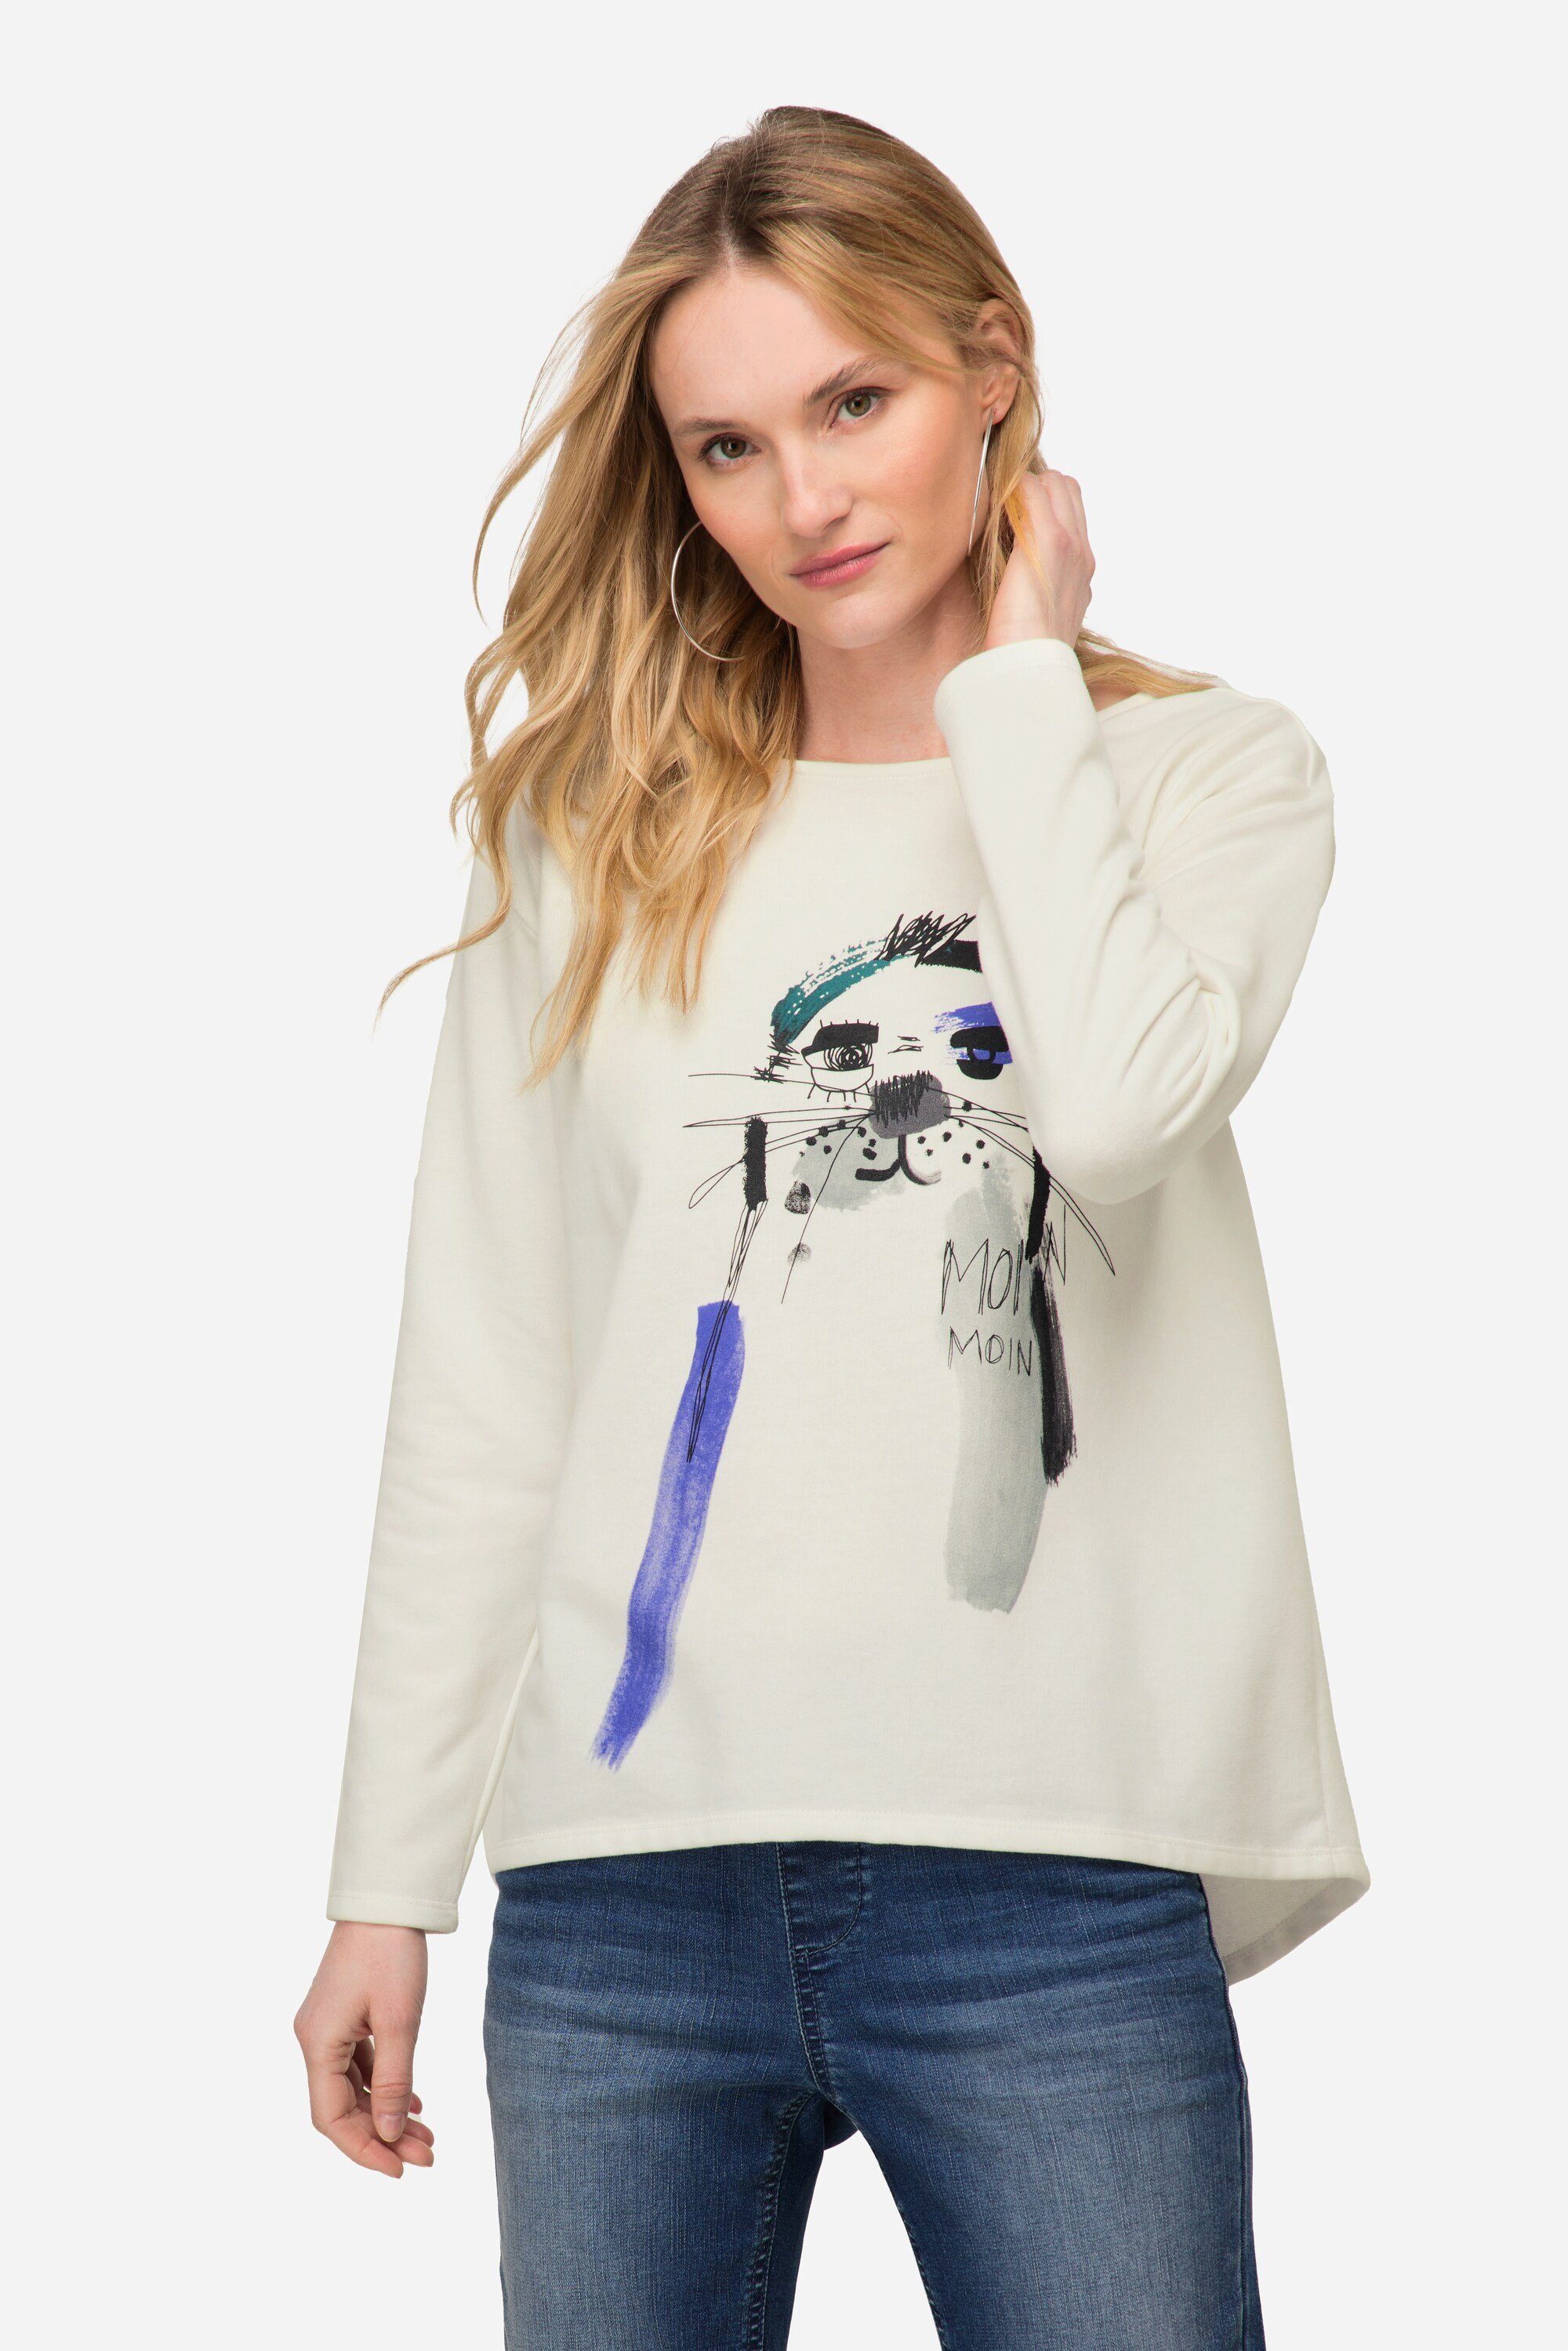 Laurasøn Sweatshirt Sweatshirt oversized Robben Print Rundhals Langarm offwhite | Sweatshirts